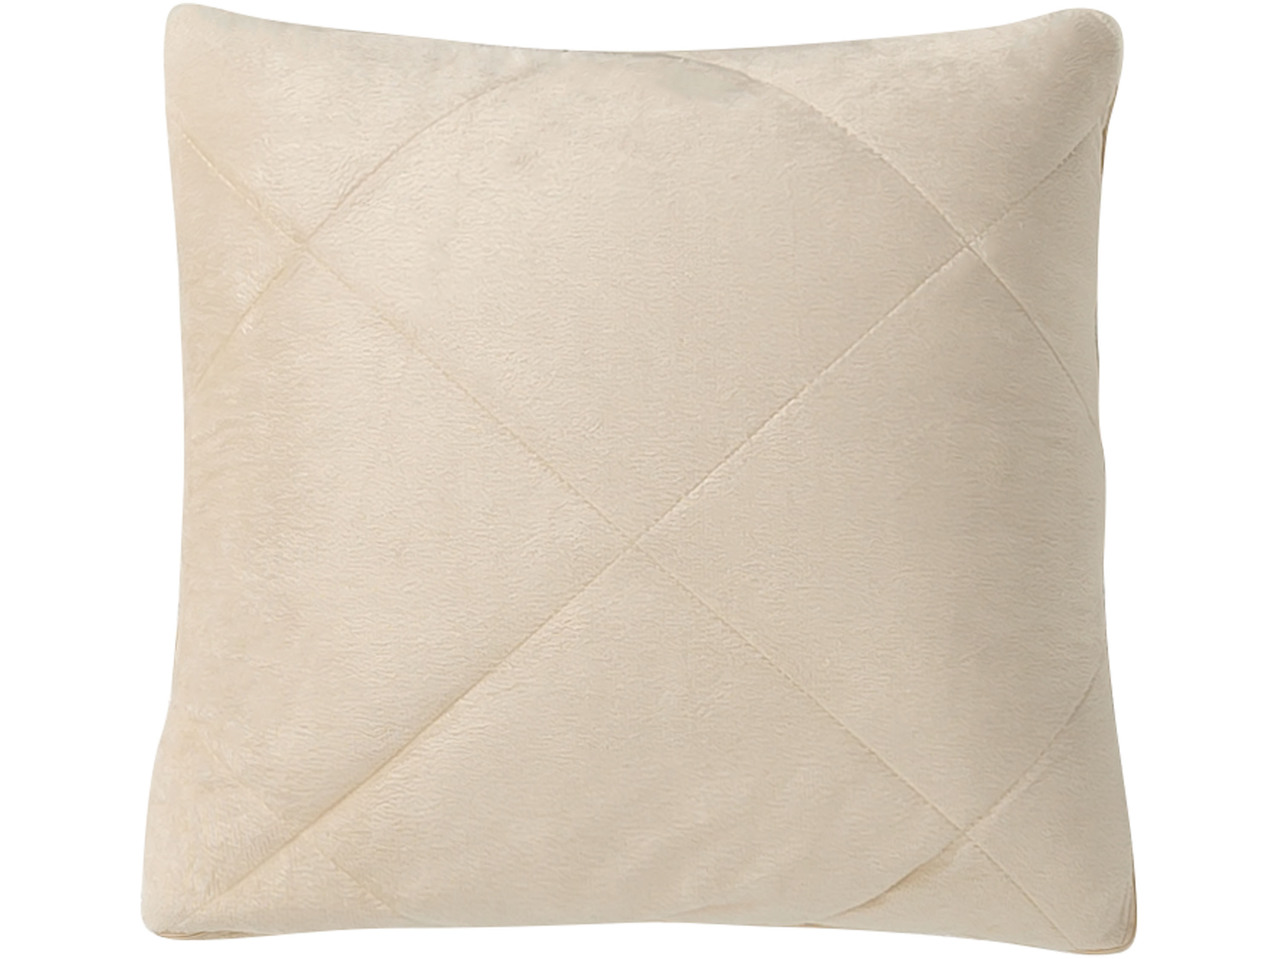 2-in-1 Cushion & Blanket